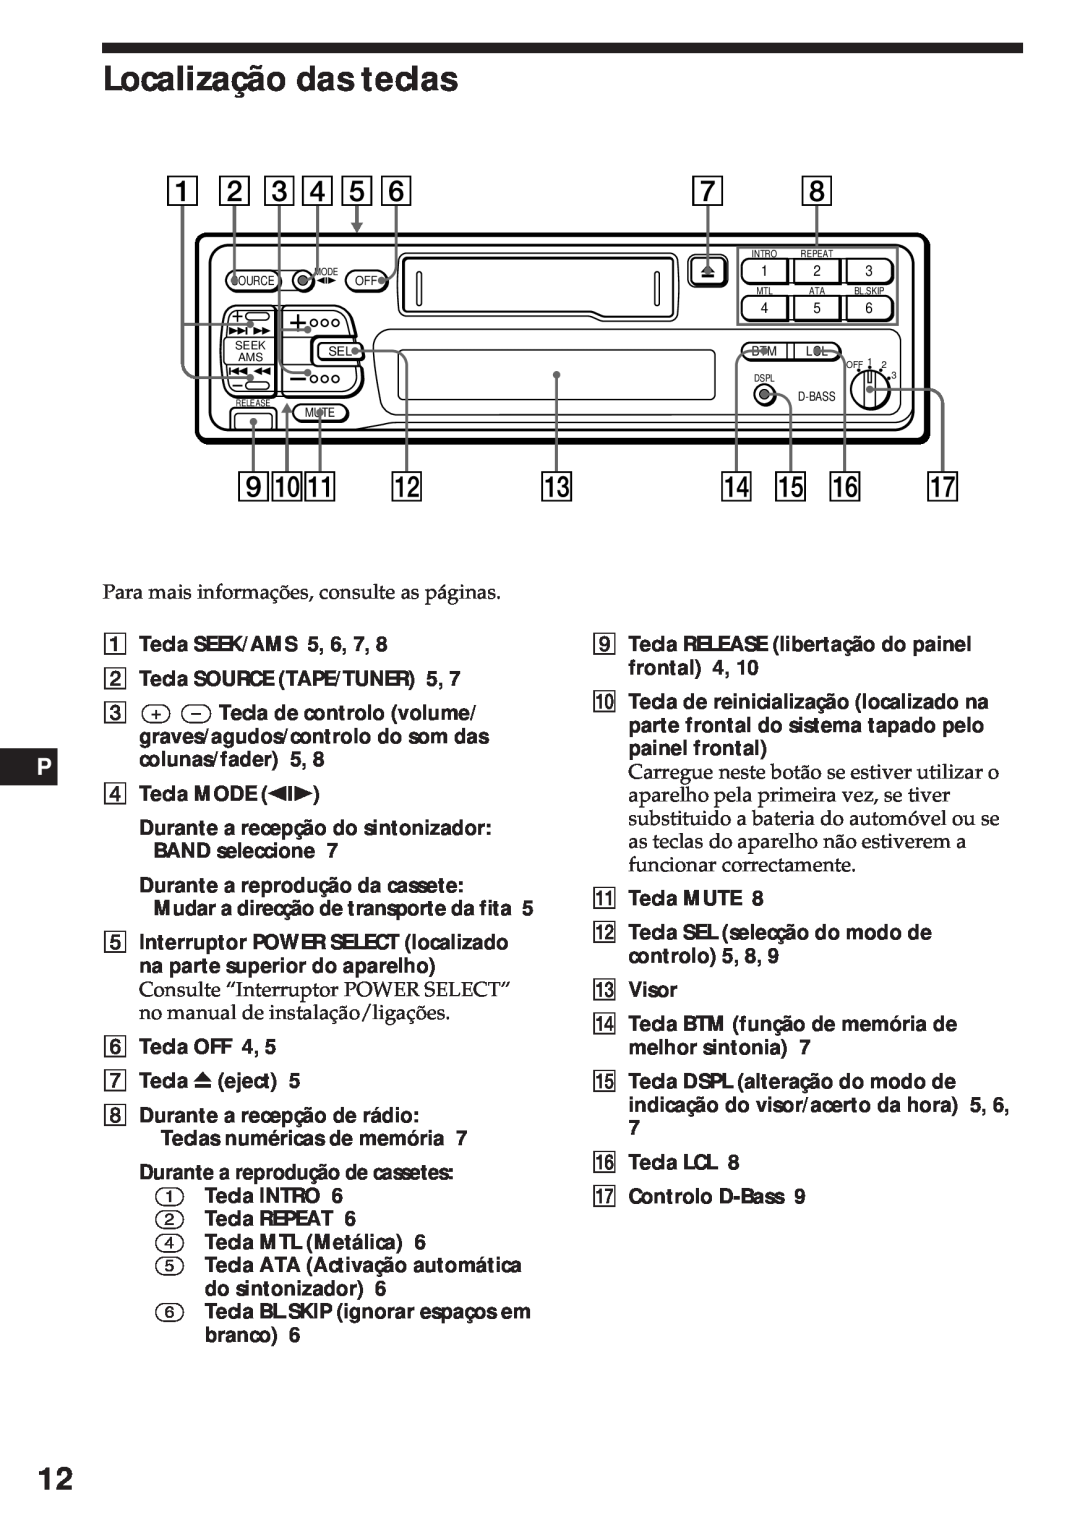 Sony XR-3750 Localização das teclas, Tecla SEEK/AMS 5, 6, 7 2 Tecla SOURCE TAPE/TUNER 5, P colunas/fader 5 4 Tecla MODE 